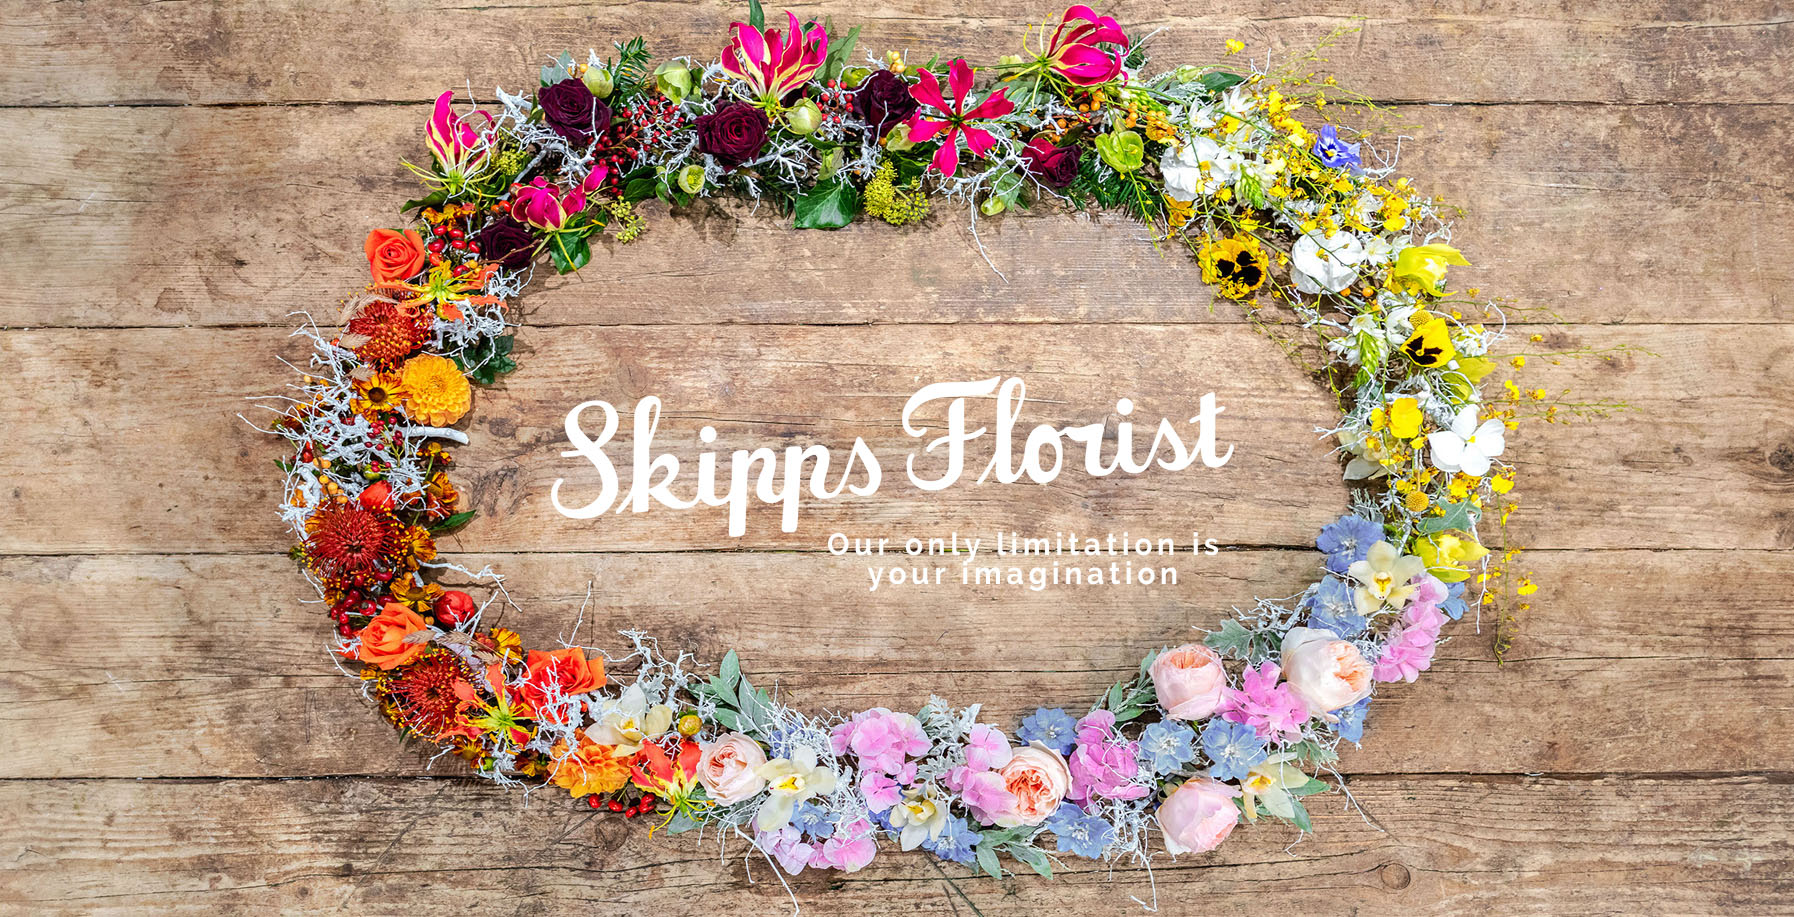 Skipps Florist